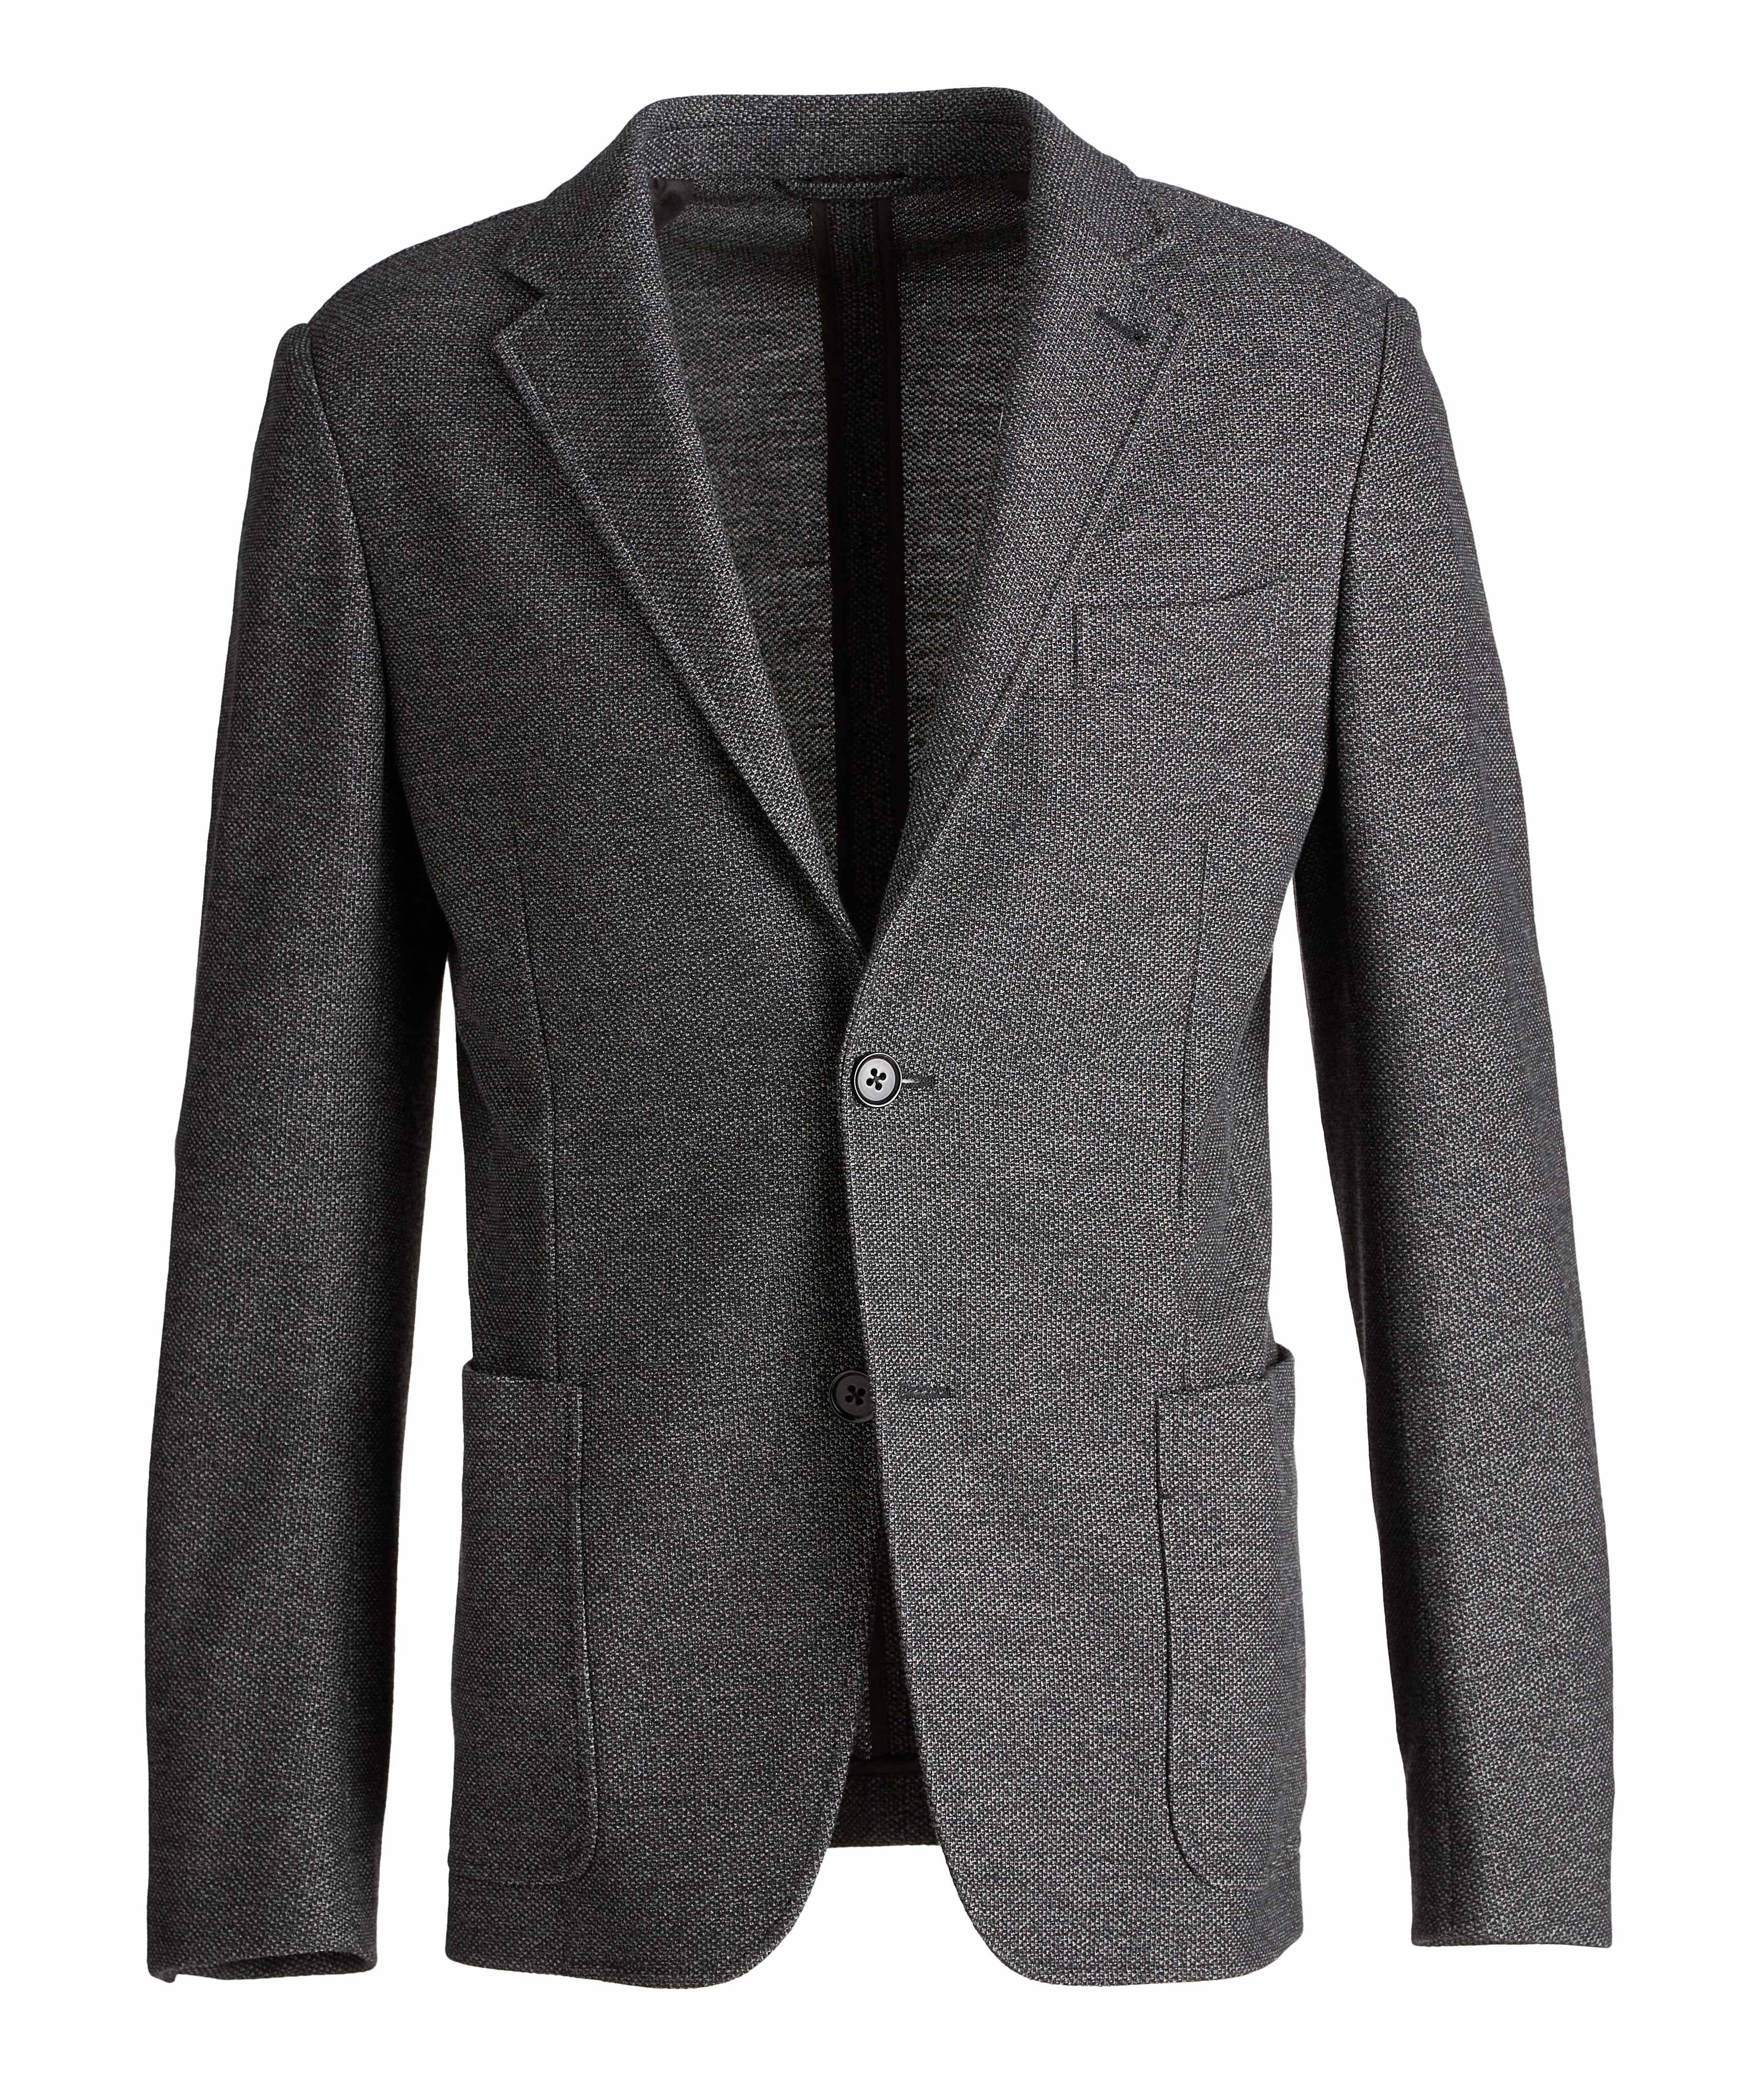 Jerseywear Cotton-Wool Sports Jacket image 0